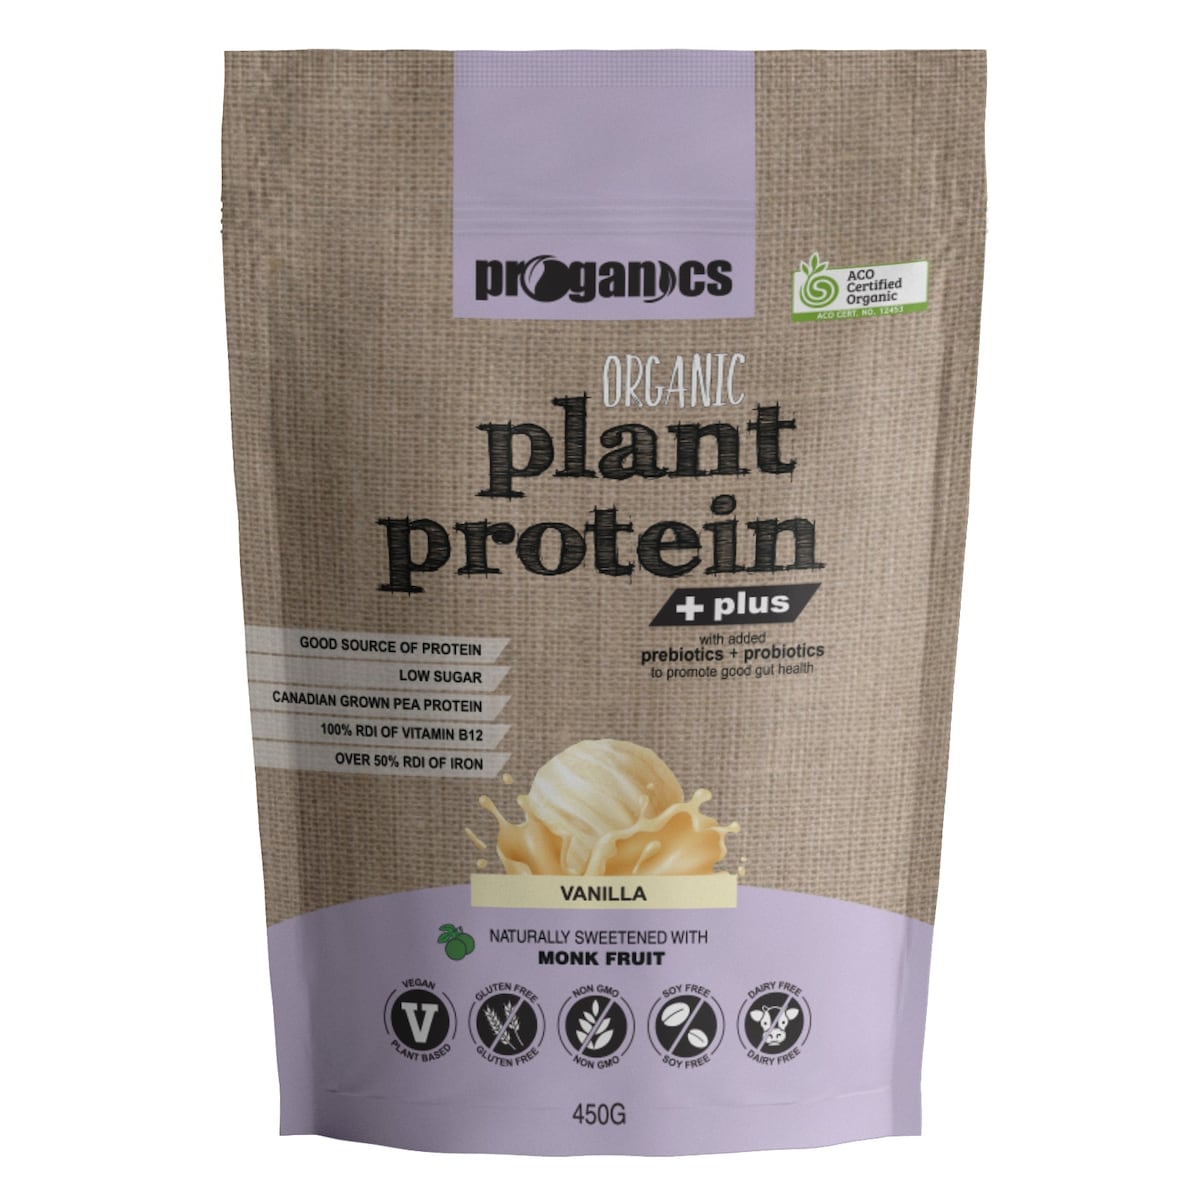 Proganics Organic Plant Protein Plus - Vanilla 450g